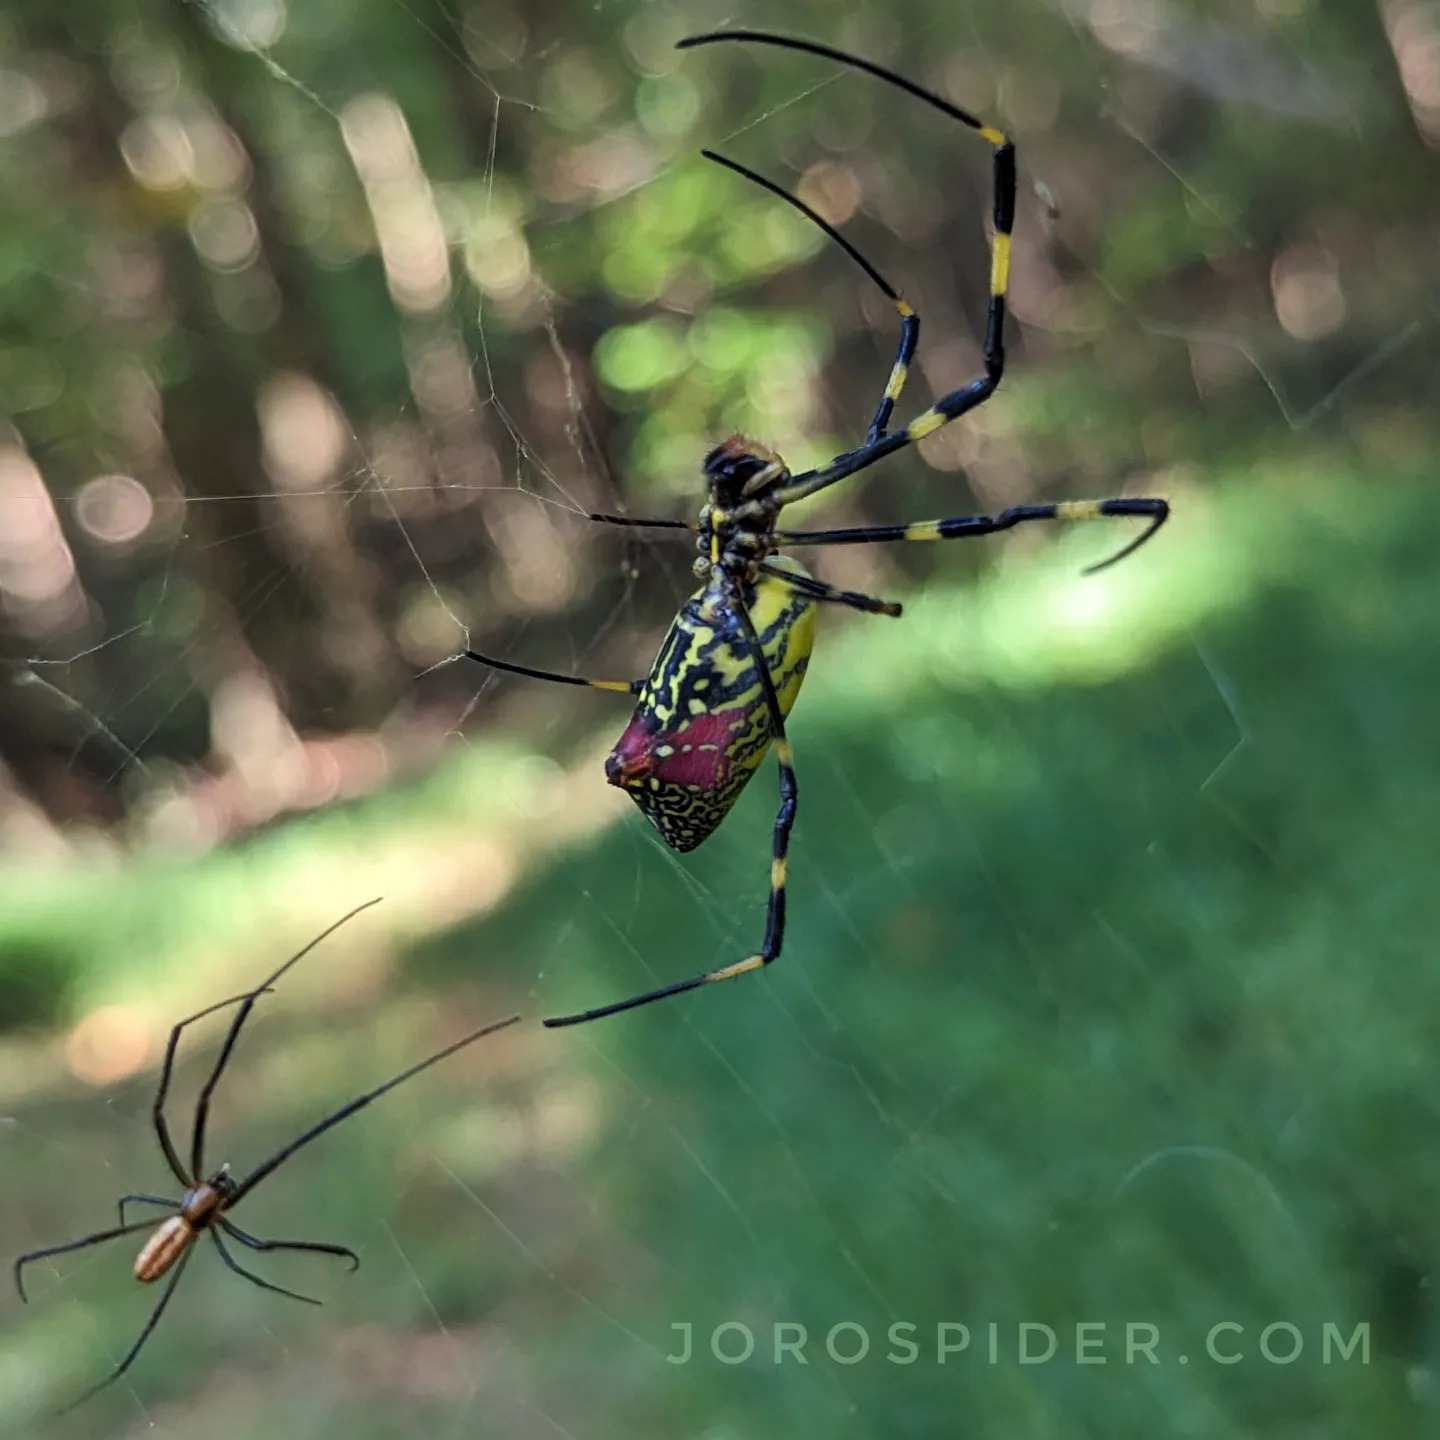 Joro Spider - male and female